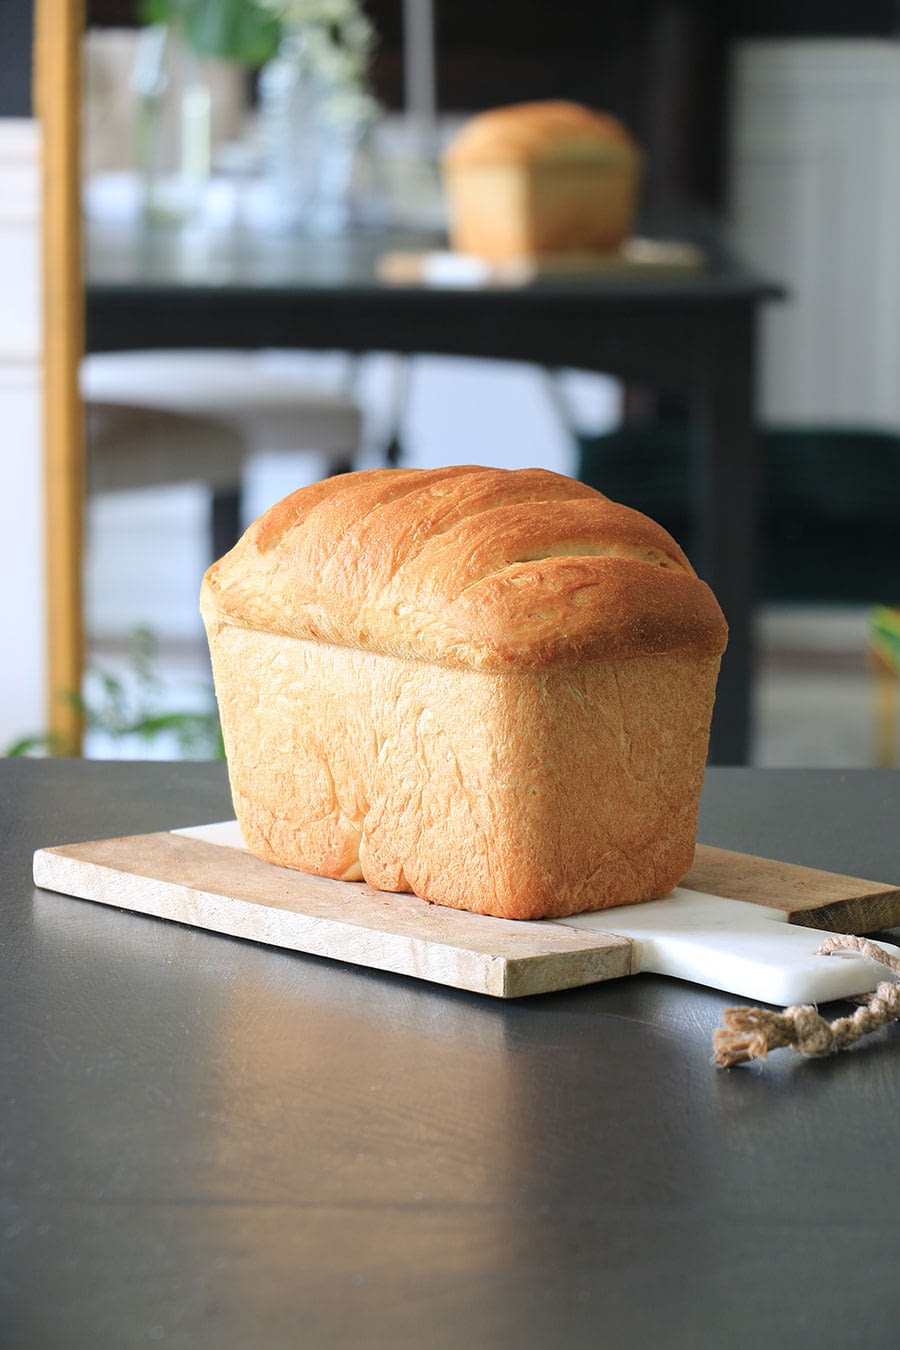 homemade bread with ridges